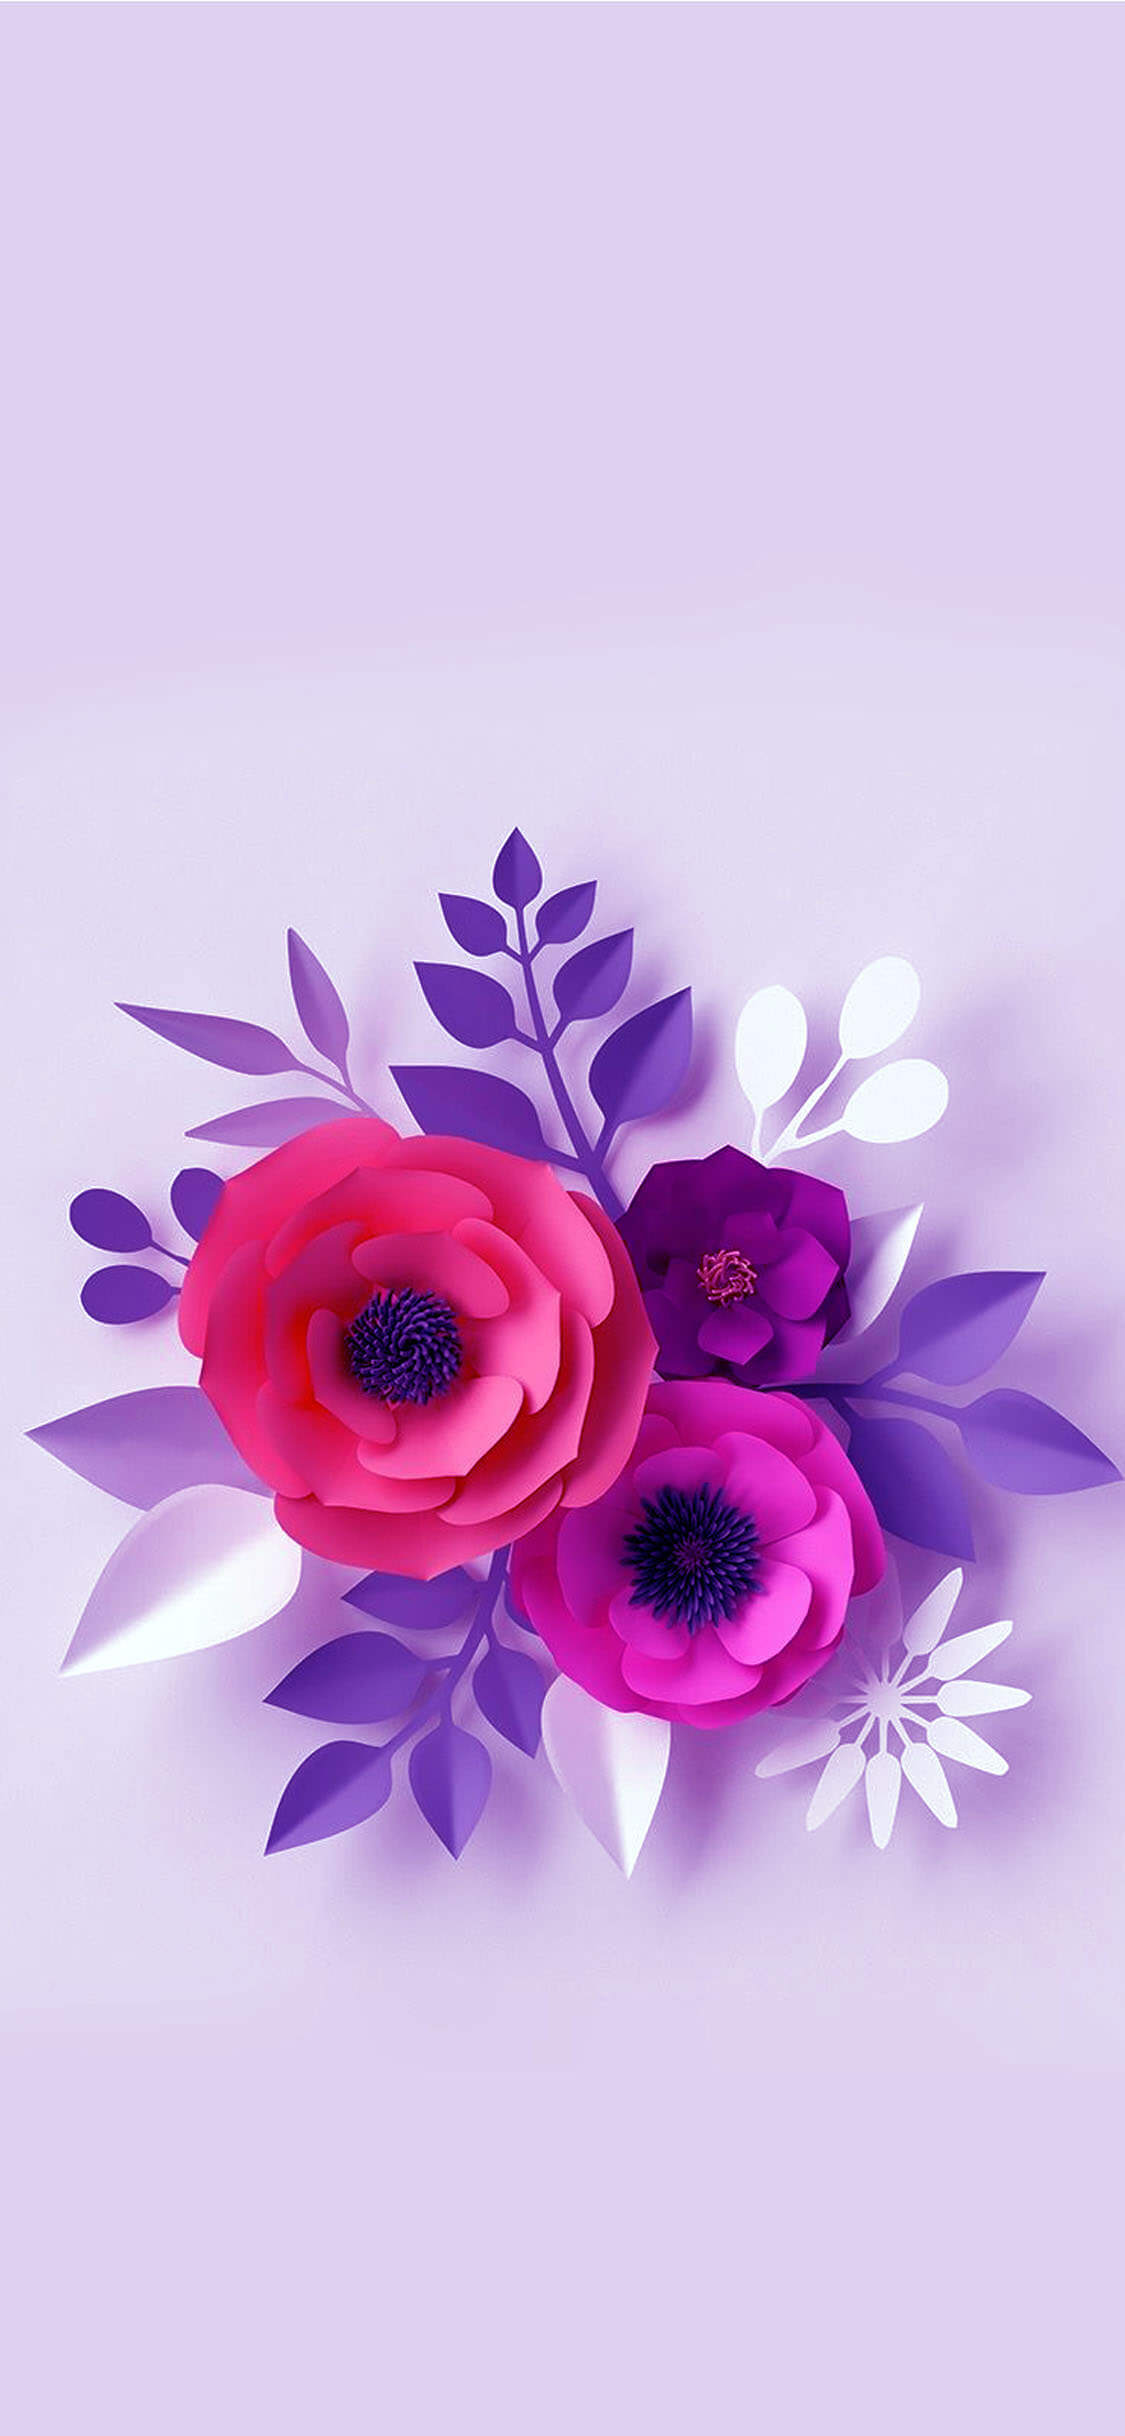 Full Hd Flower Wallpaper Iphone X